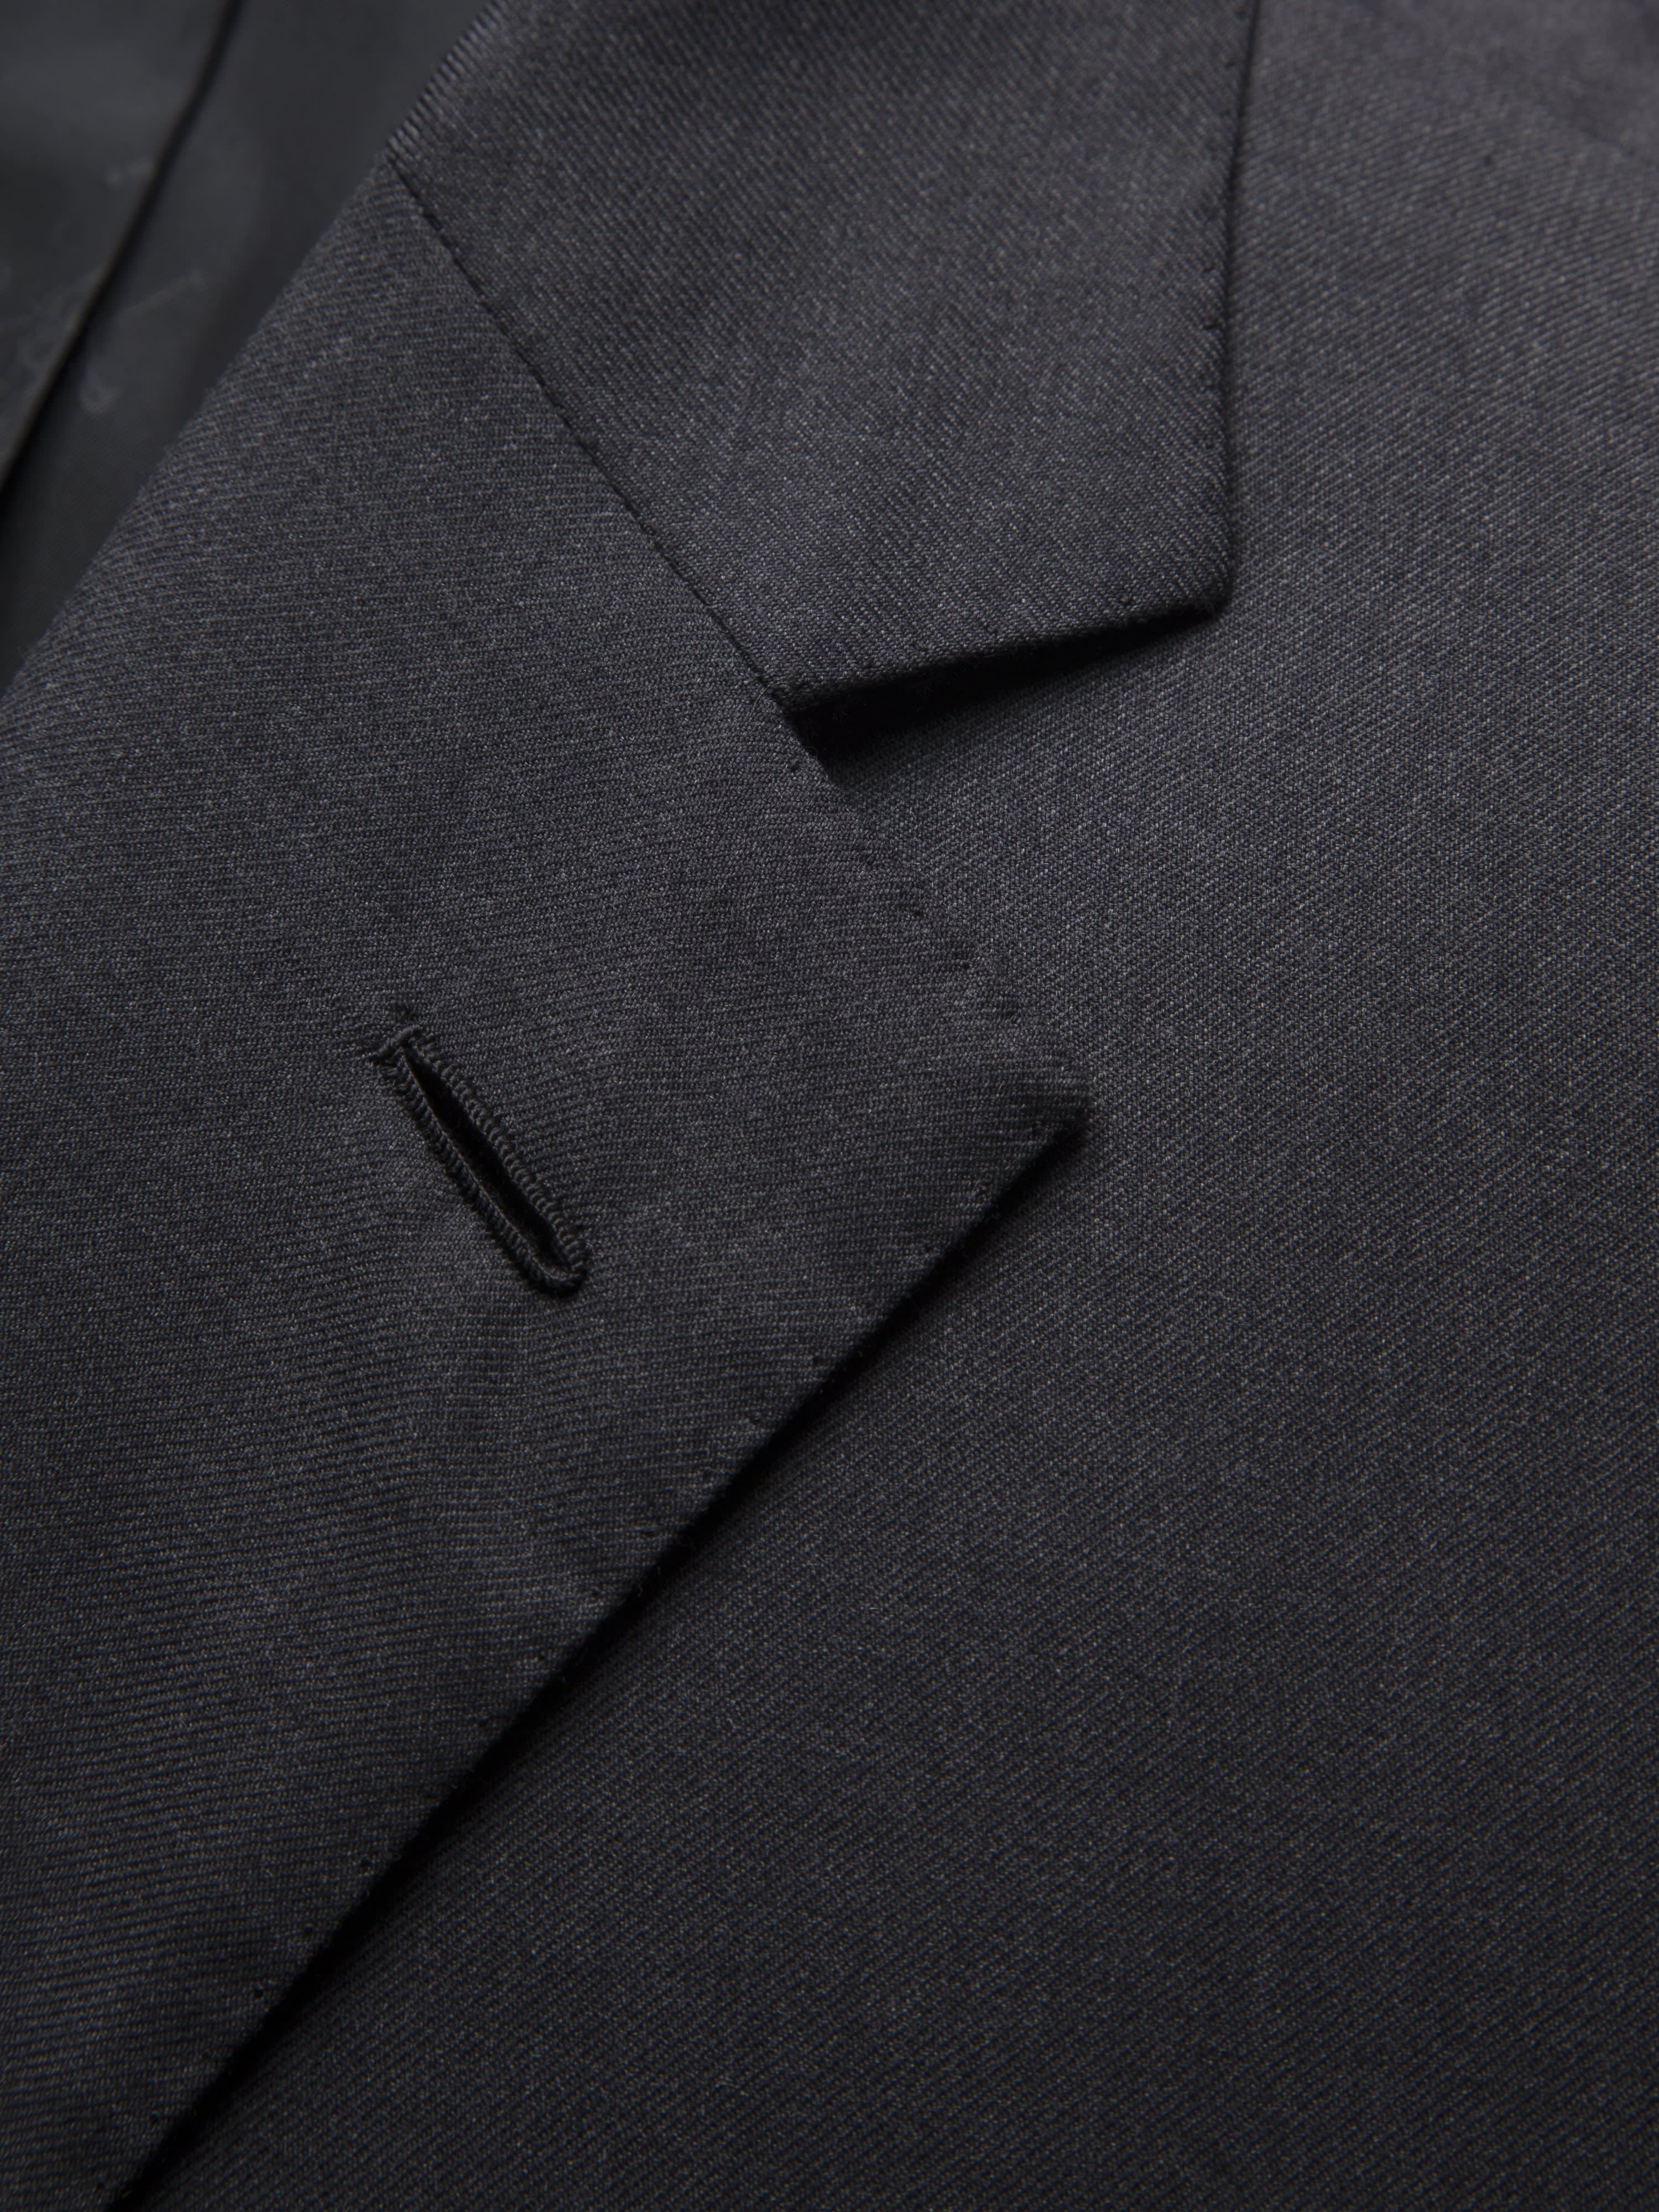 Brioni Parlamento Handmade Gray Striped Wool Super 160's Suit EU 54 New US 44